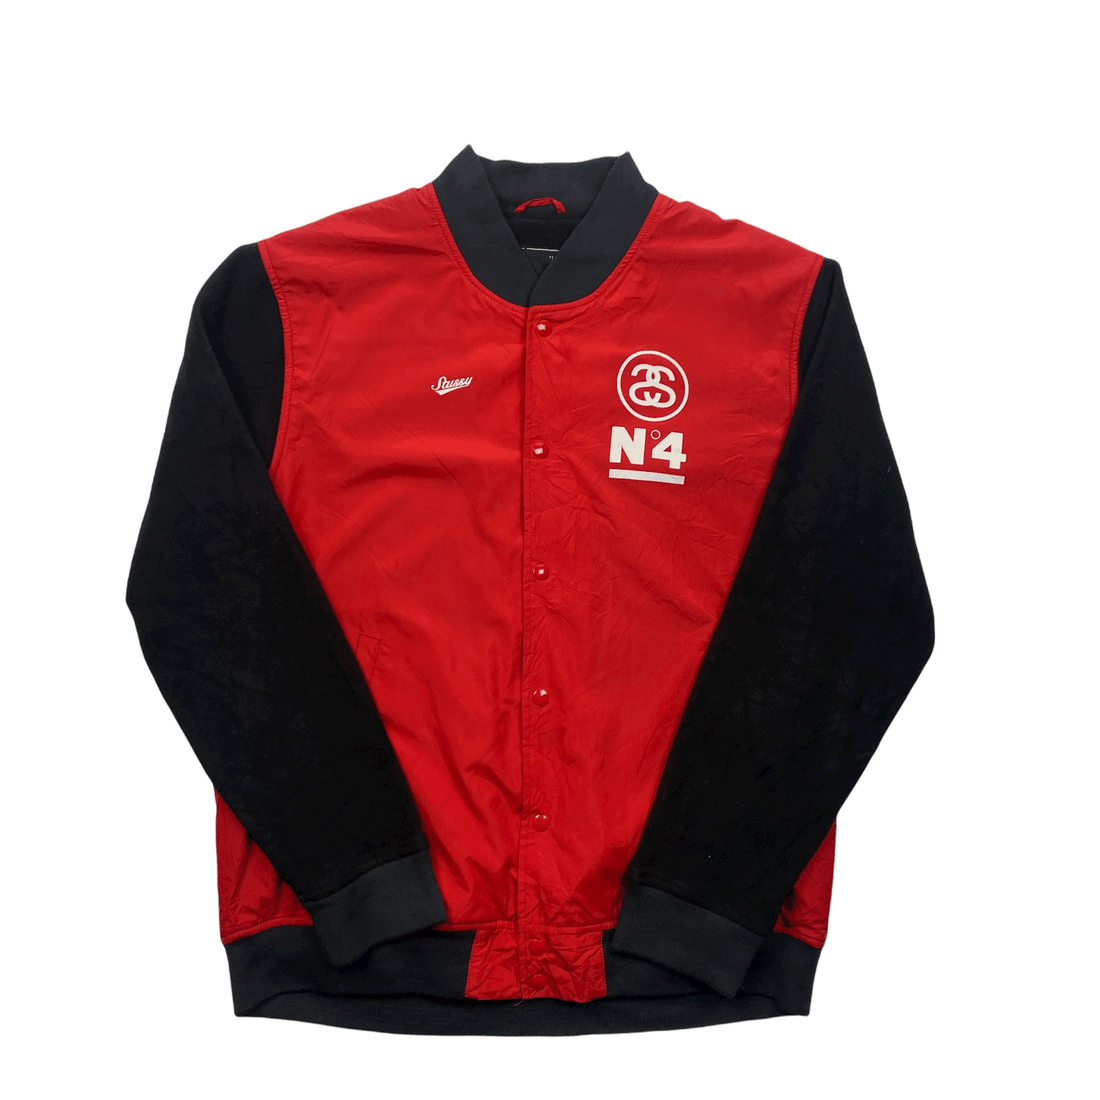 Vintage 90s Red + Black Stussy Varsity Jacket - Extra Large - The Streetwear Studio